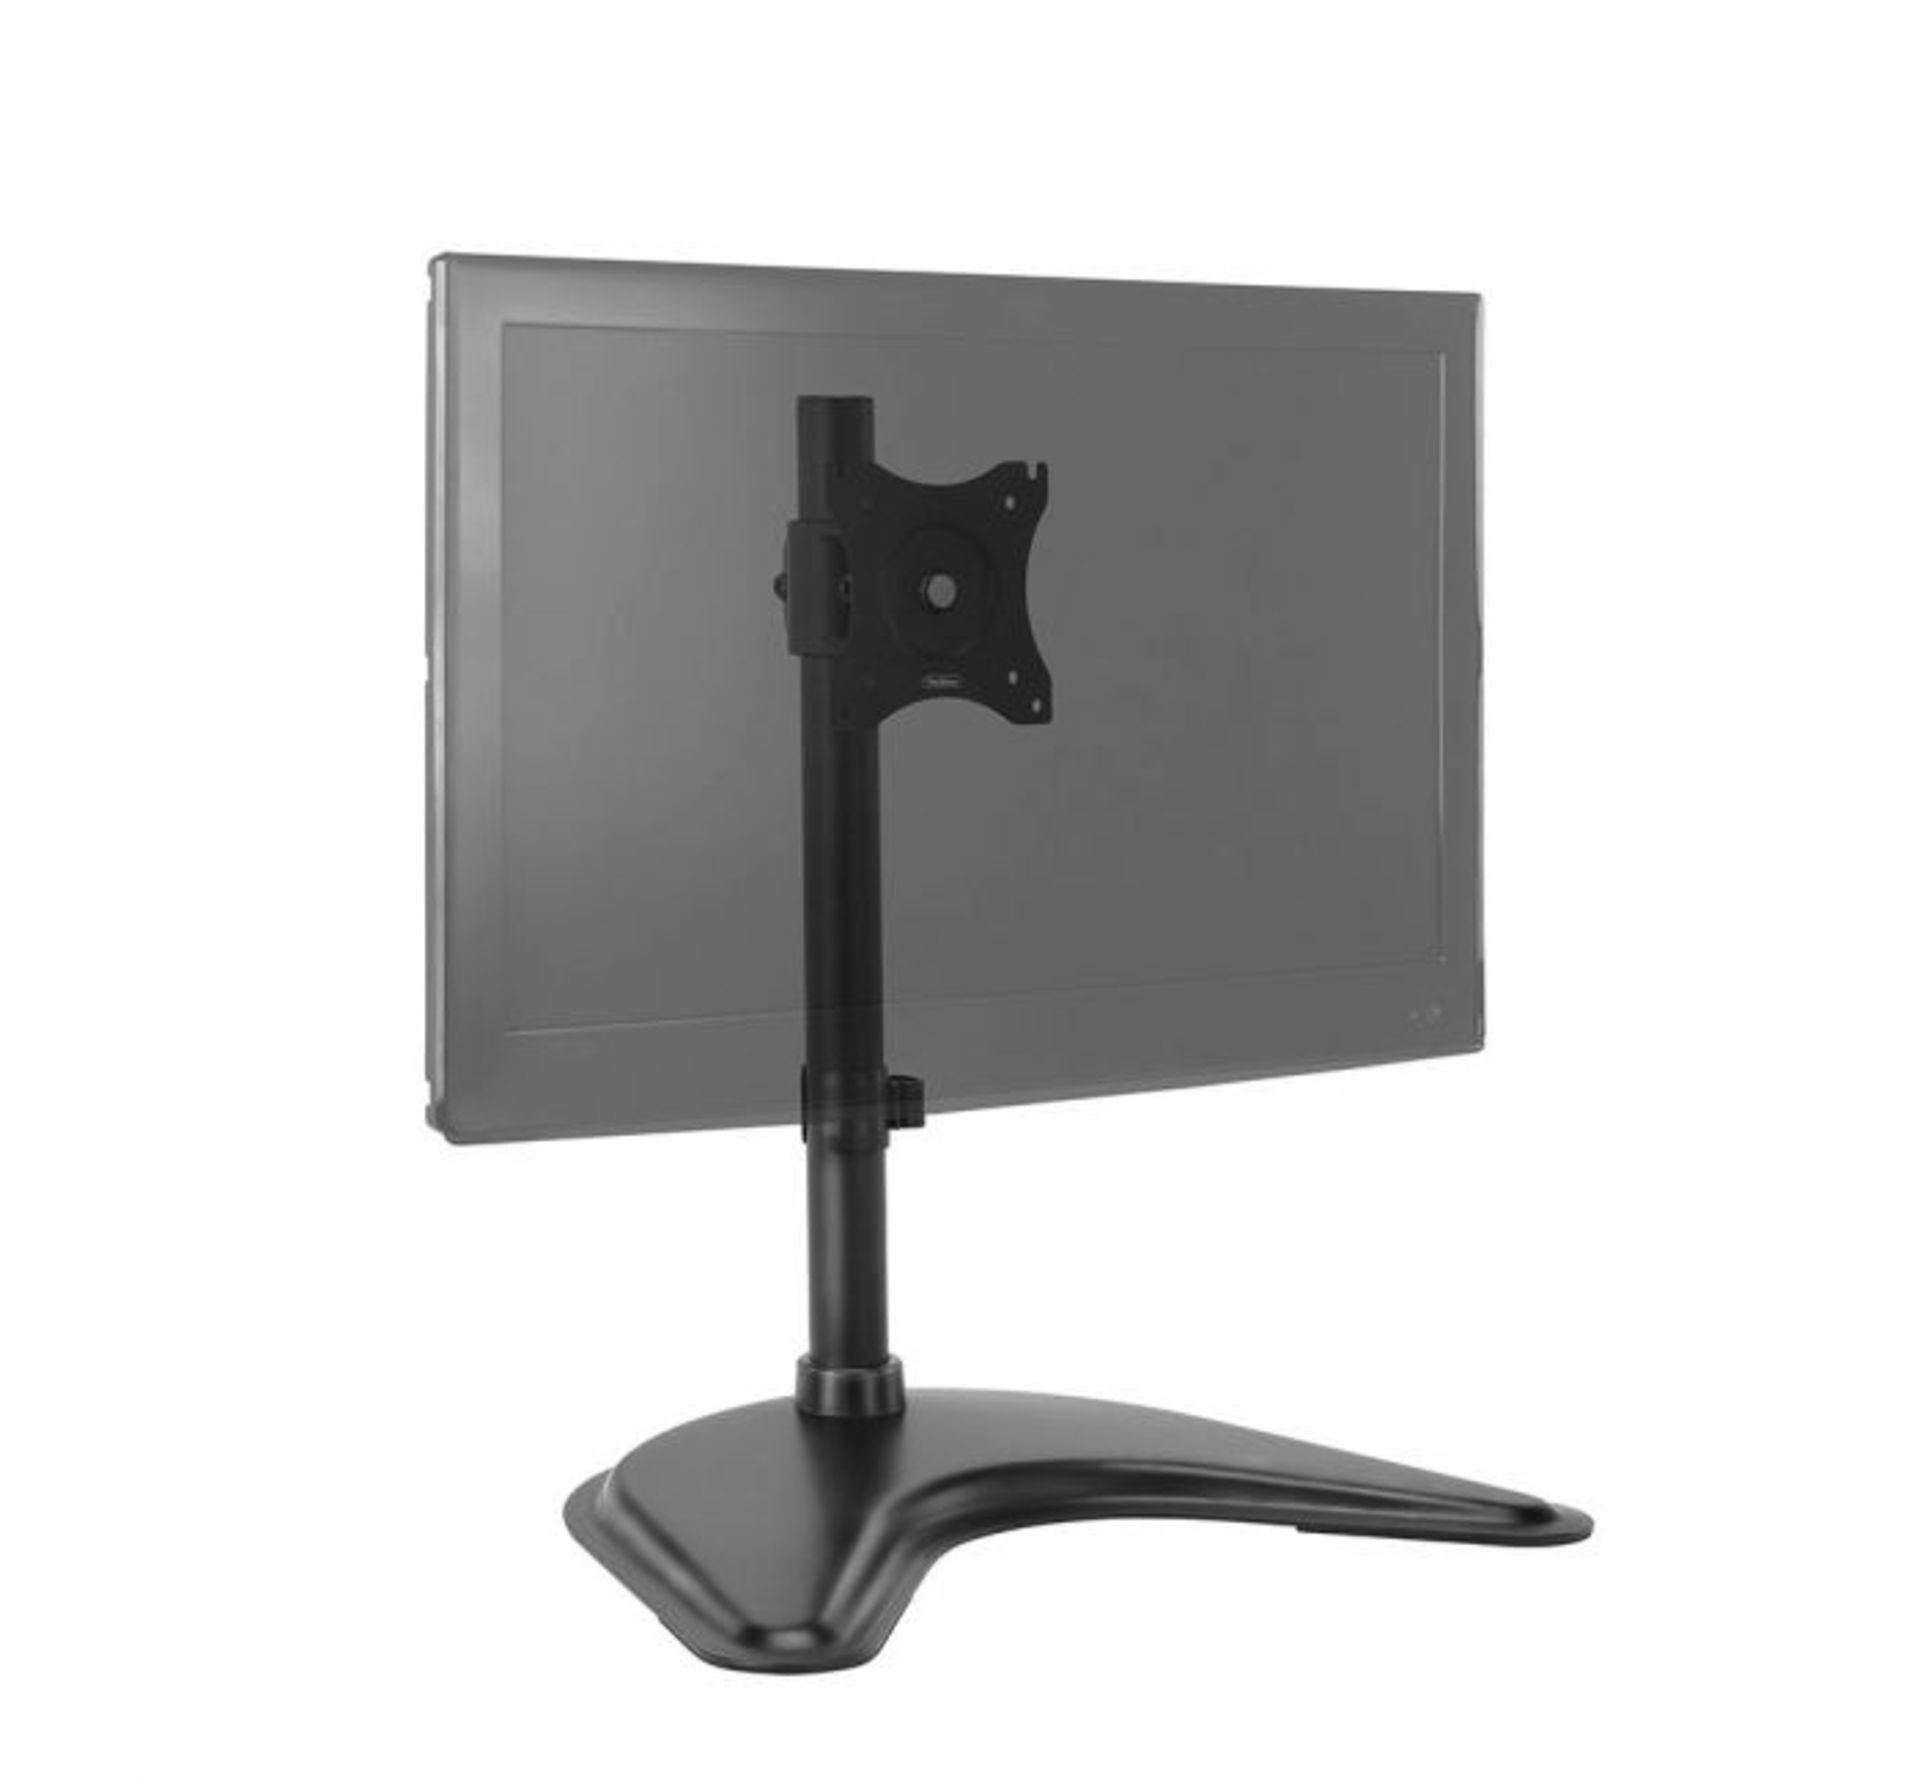 (AP133) Single Monitor Desk Mount Maximum weight capacity 10kg Fits most flat screen monitors... - Image 3 of 3